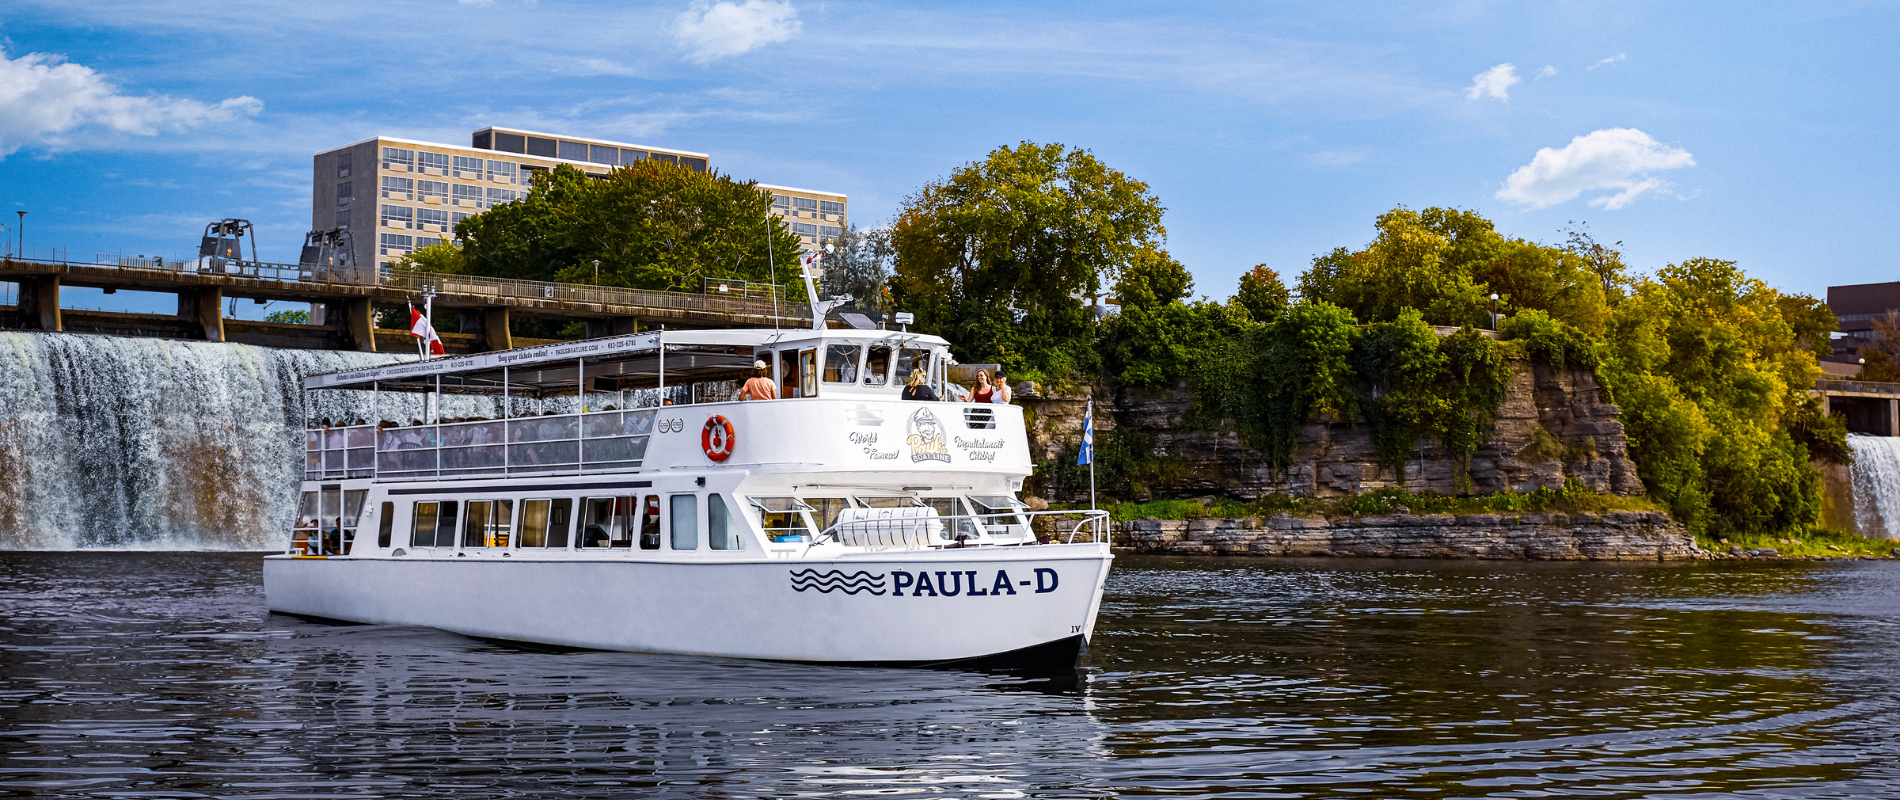 Ottawa River Cruise